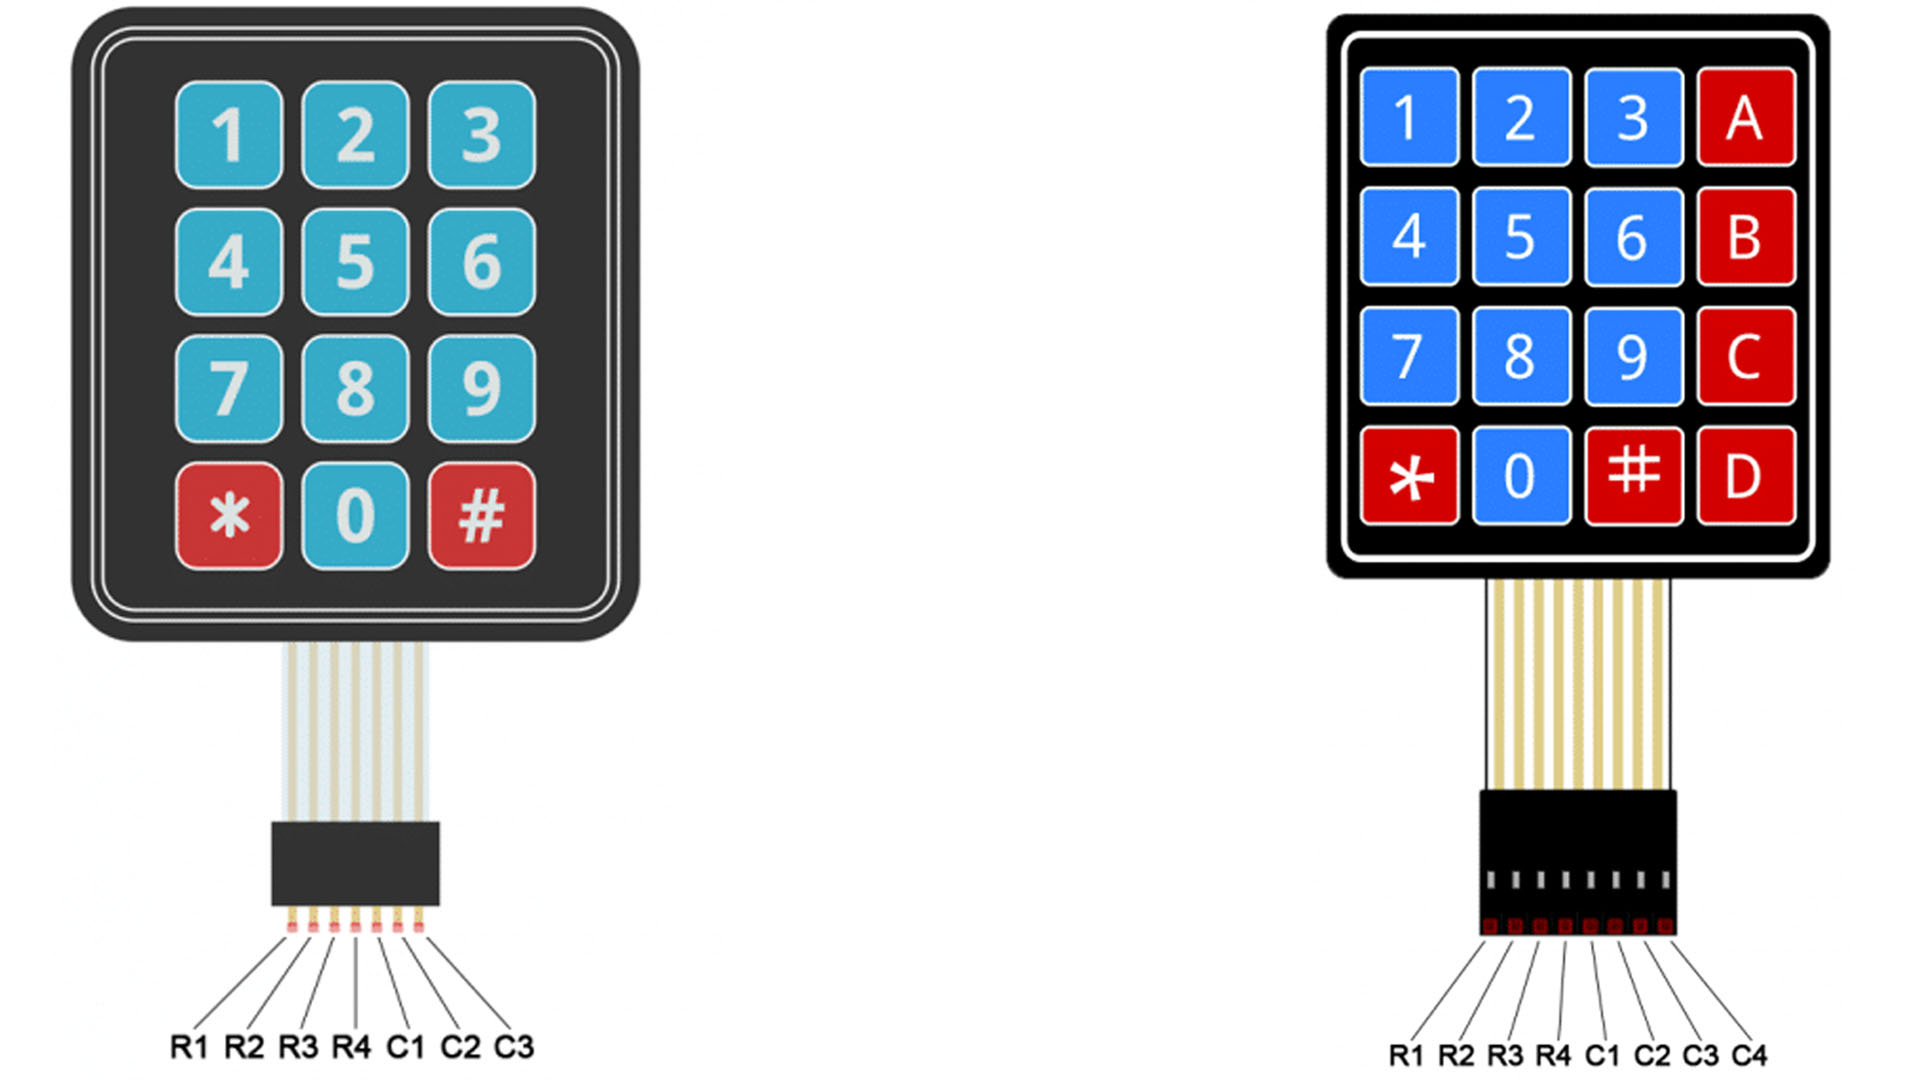 Arduino keypad pins columns and rows